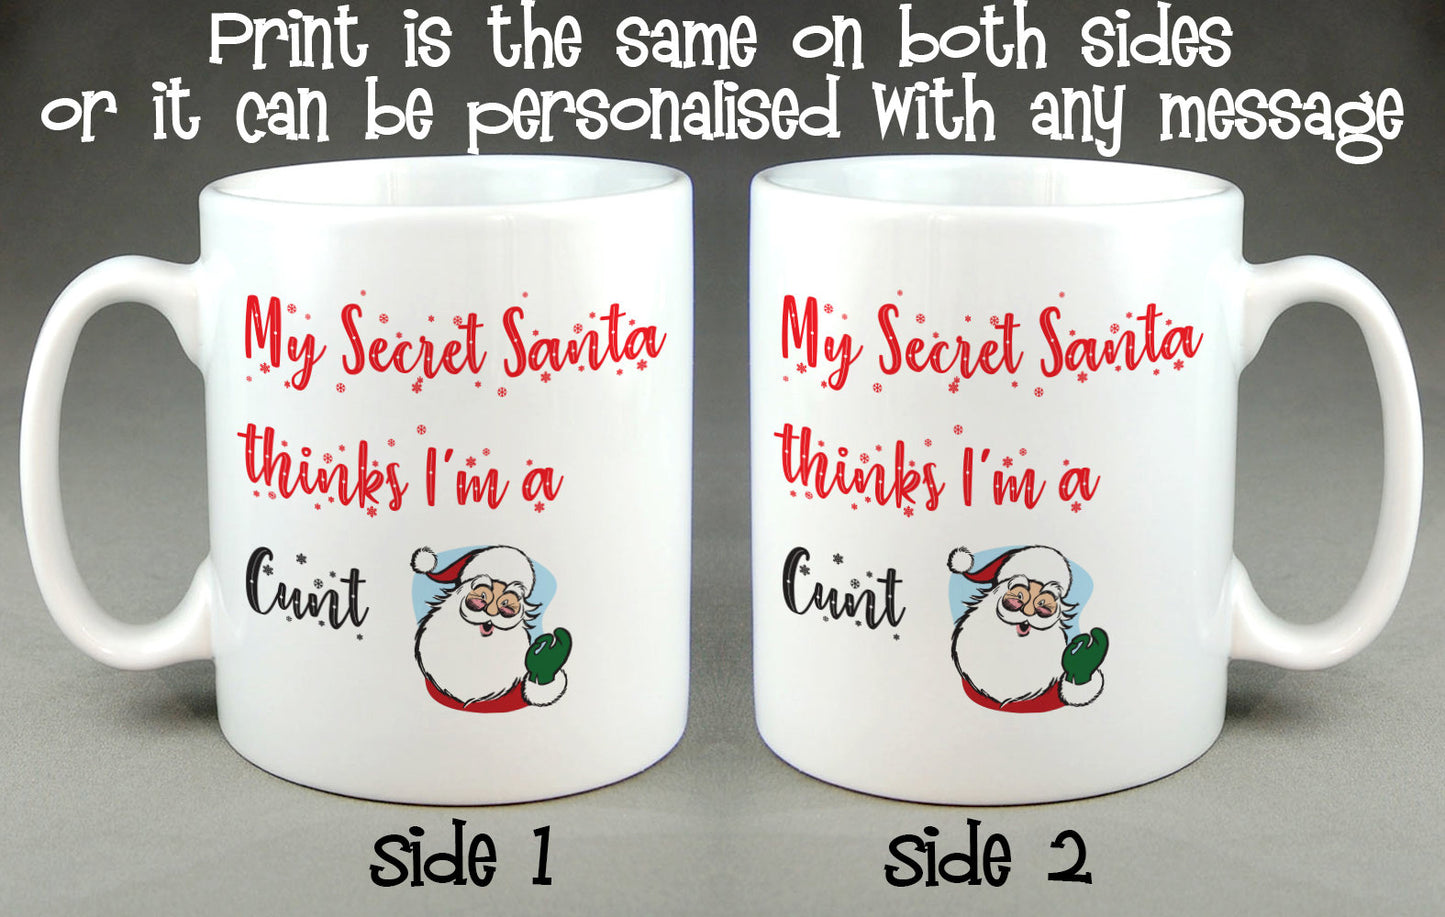 My Secret Santa Thinks I'm a C*nt Mug - Rude Funny Offensive Christmas Gift